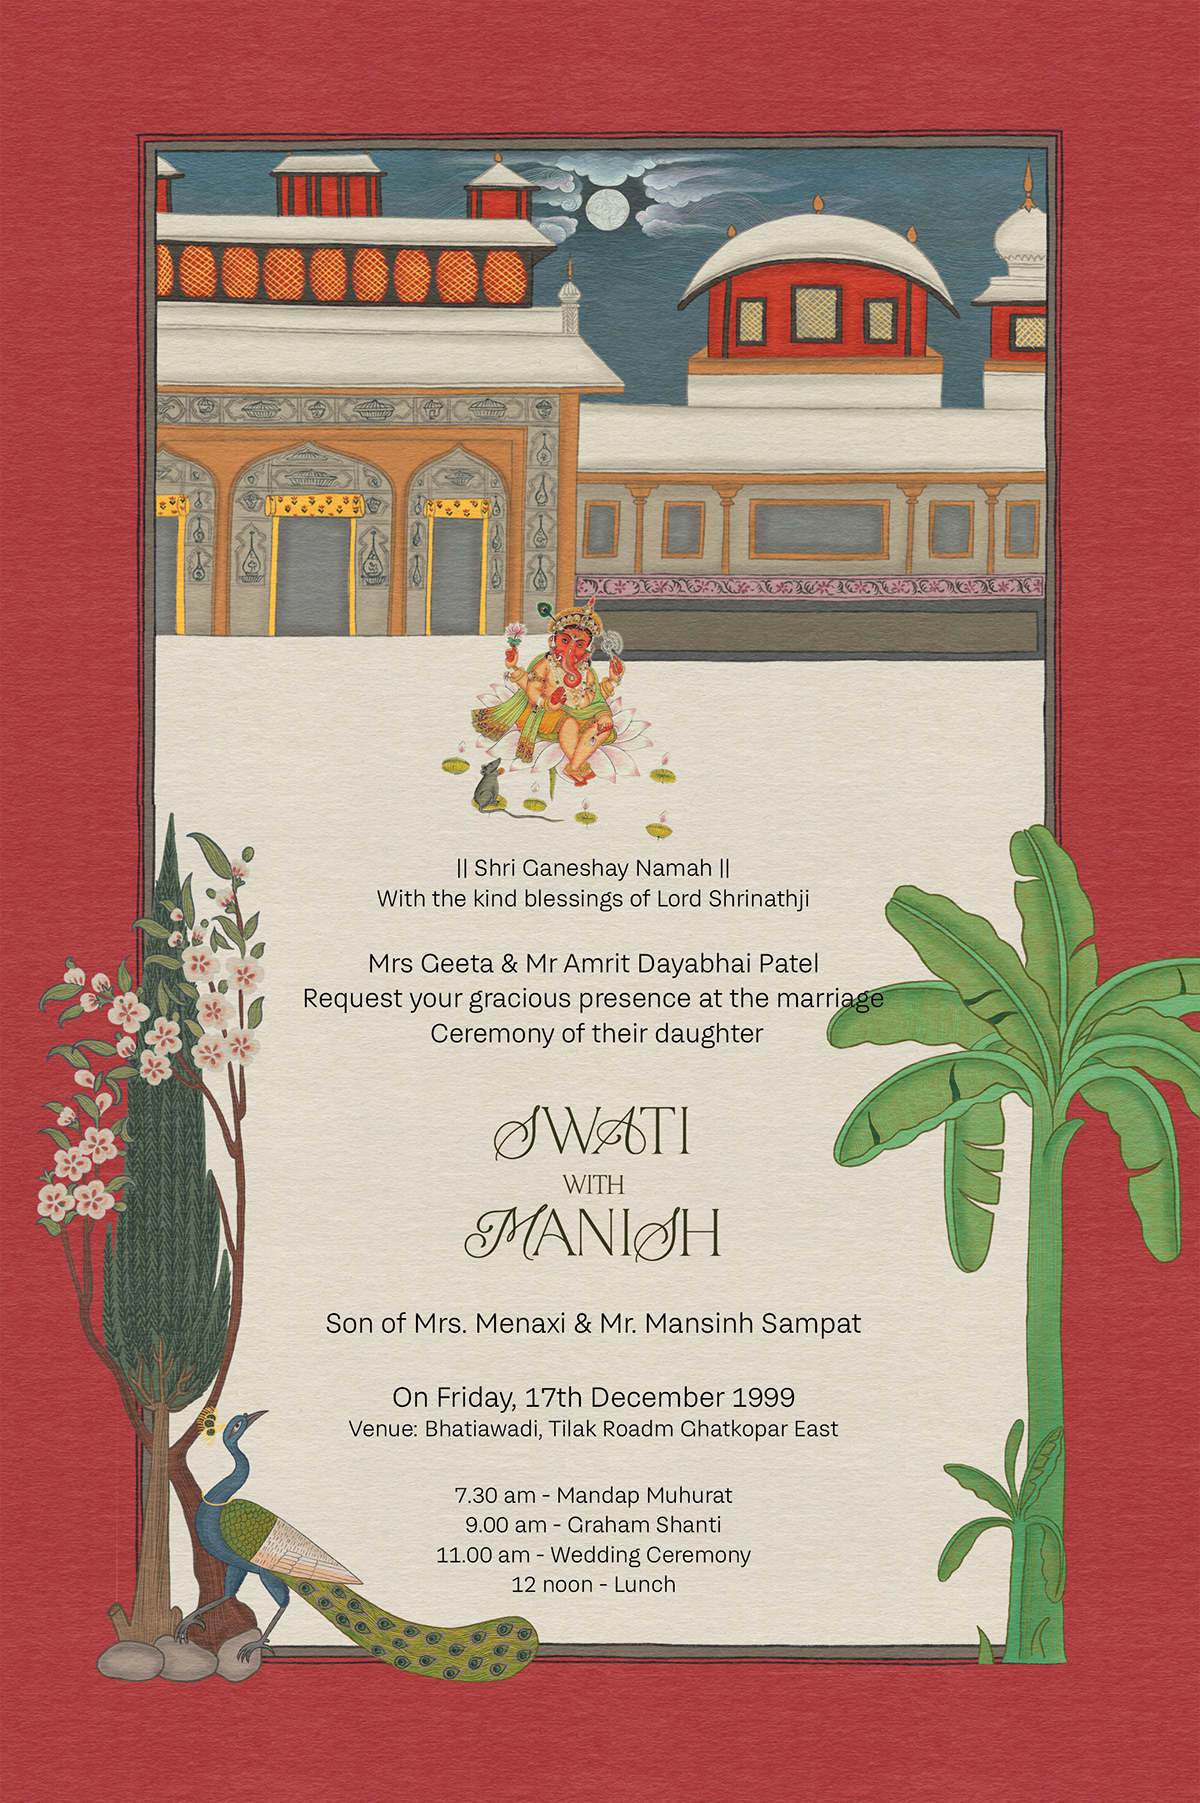 Indian art Indian miniature painting mughal art Picchwai Pichwai Pichwai painting Rajasthan Wedding Card wedding invitation wedding invite